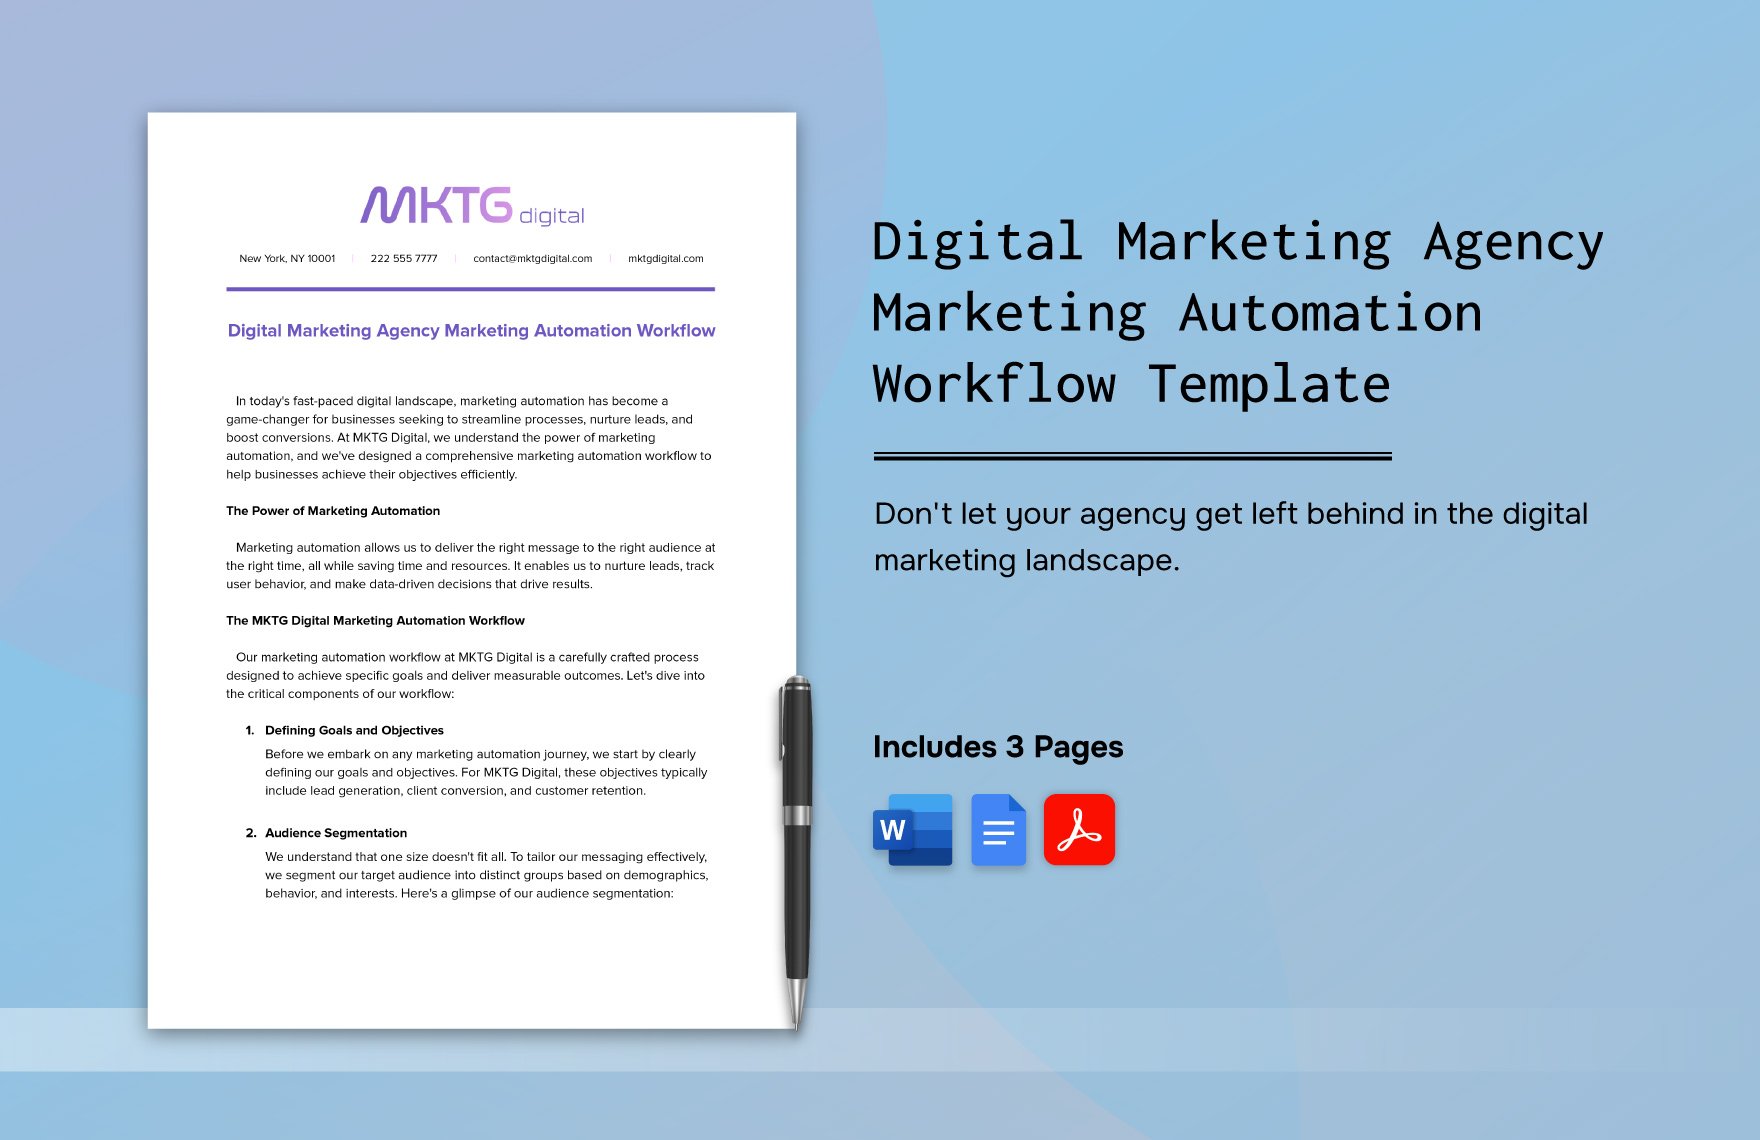 Digital Marketing Agency Marketing Automation Workflow Template in Word, Google Docs, PDF